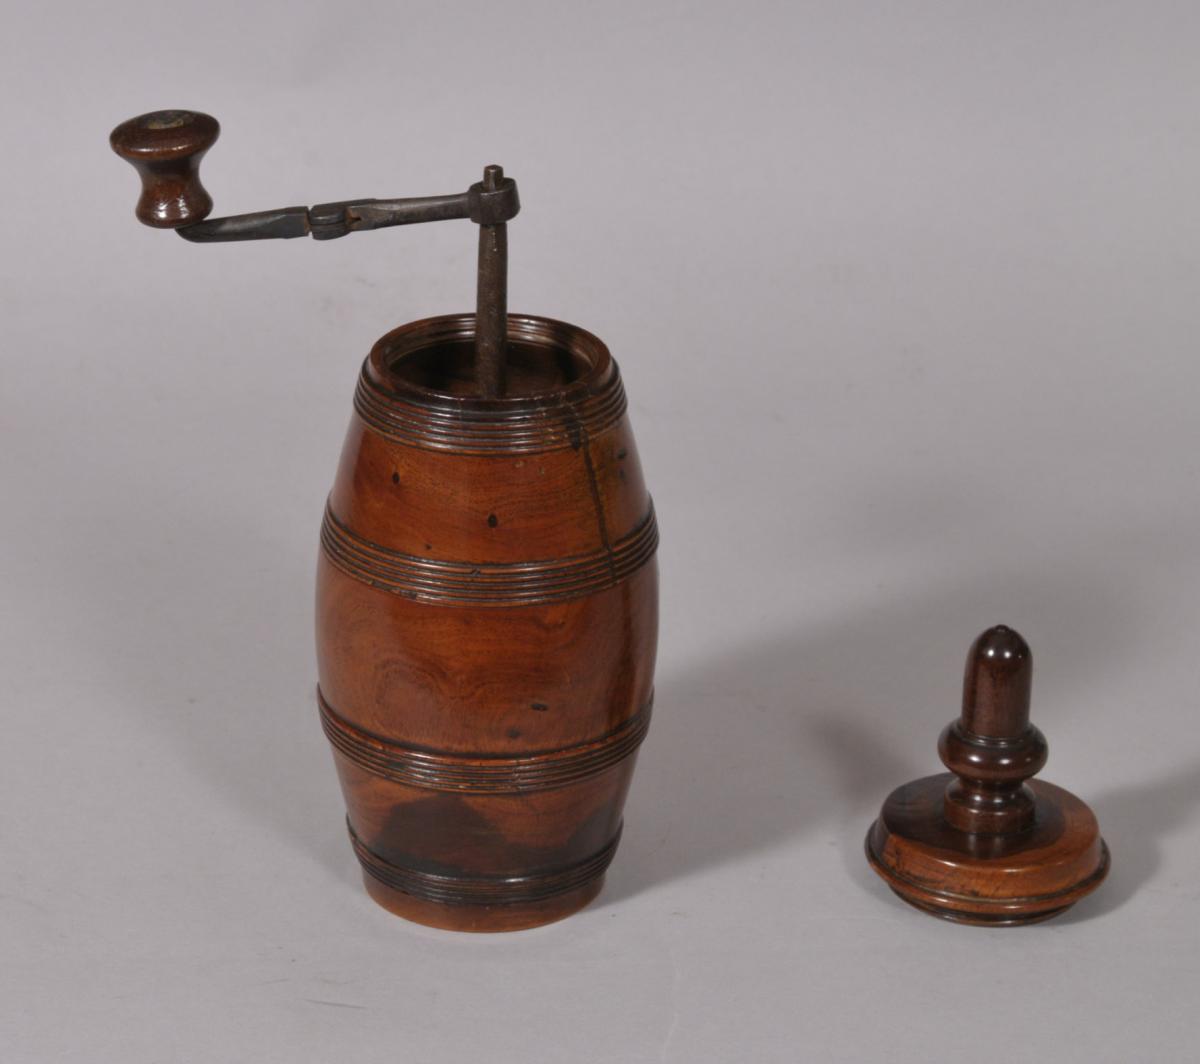 S/4786 Antique Treen 18th Century Barrel Shaped Lignum Vitae Coffee Grinder